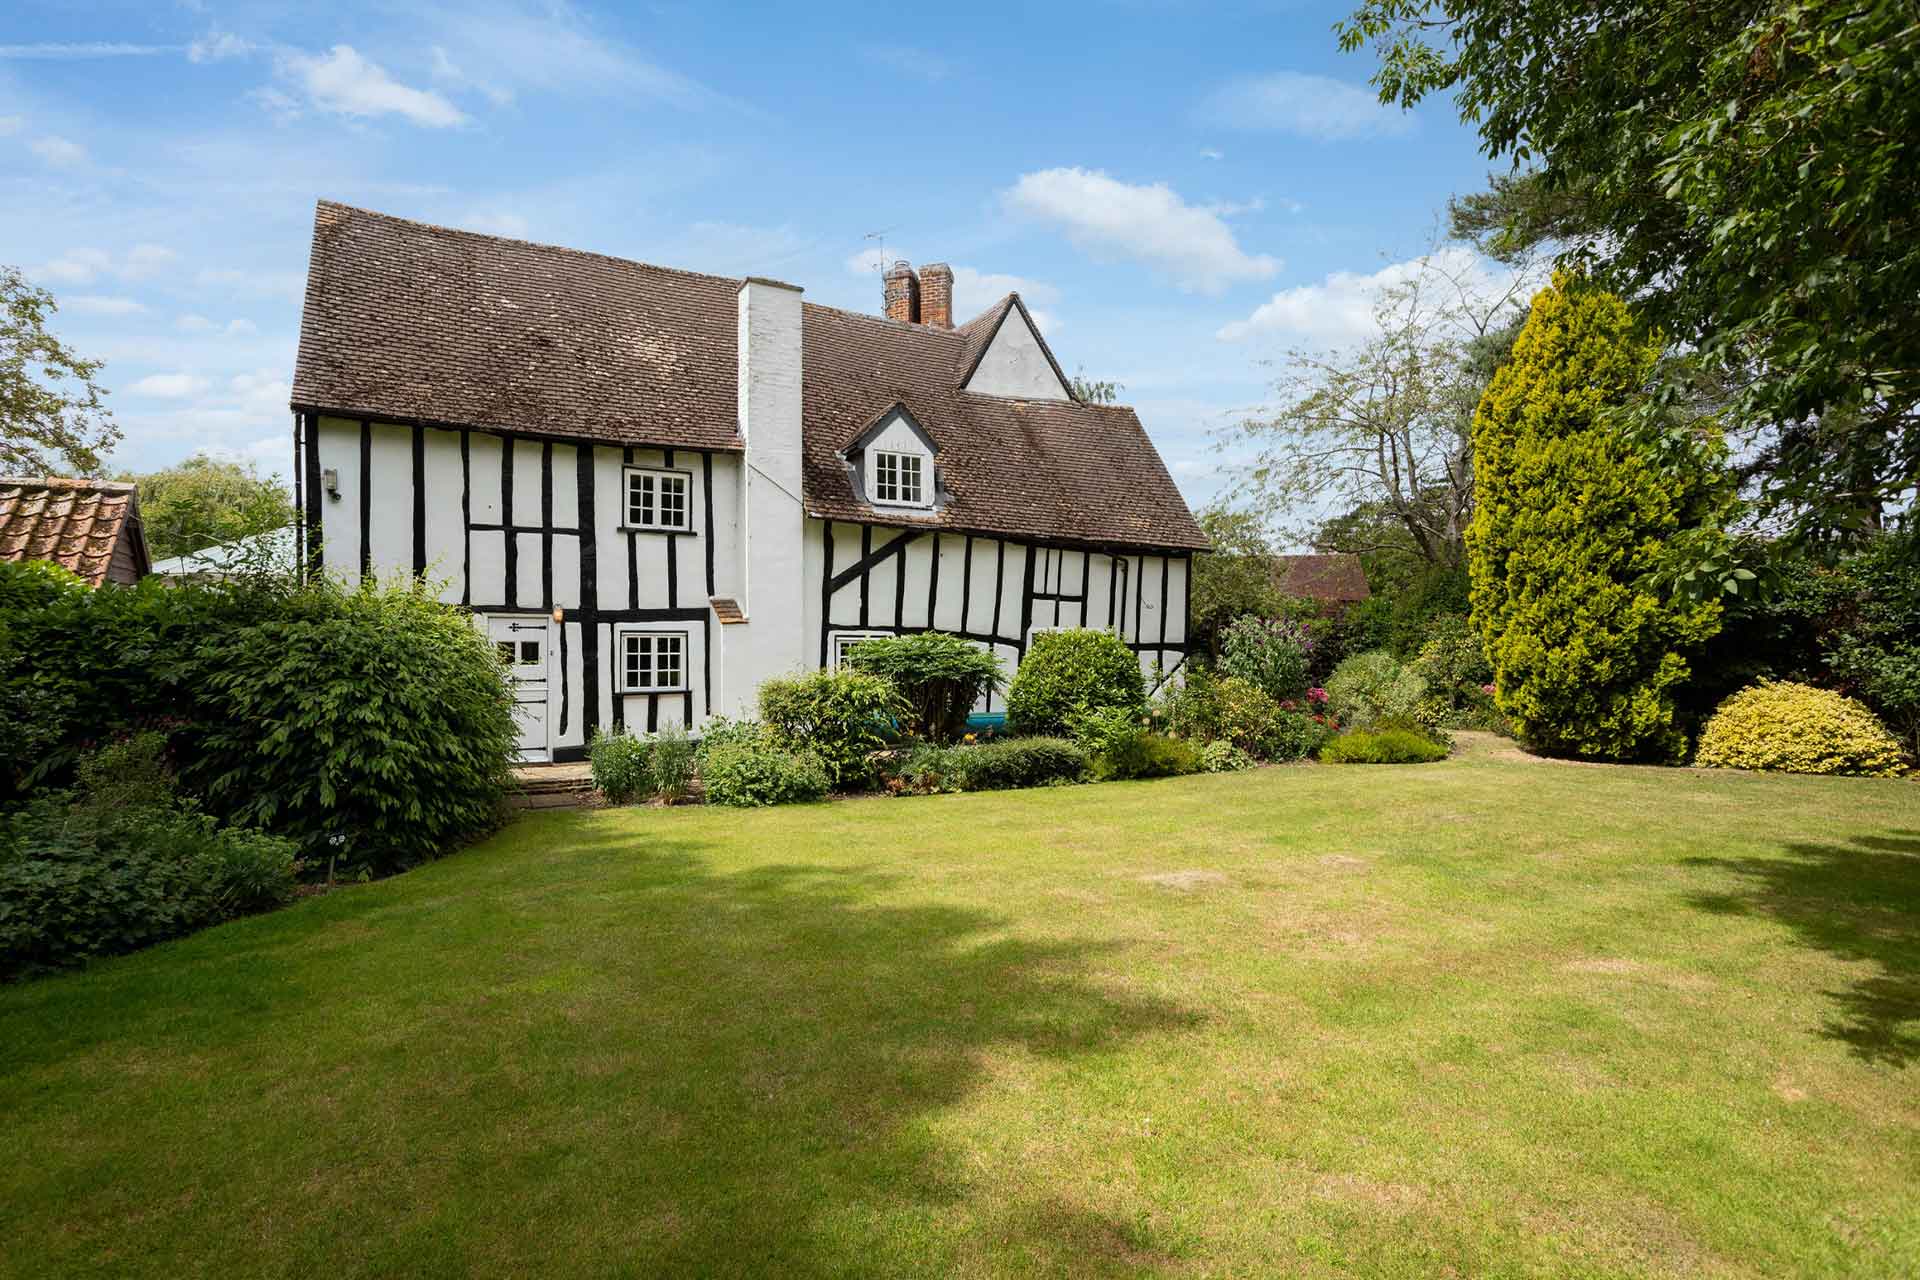 Tudor cottage with large garden